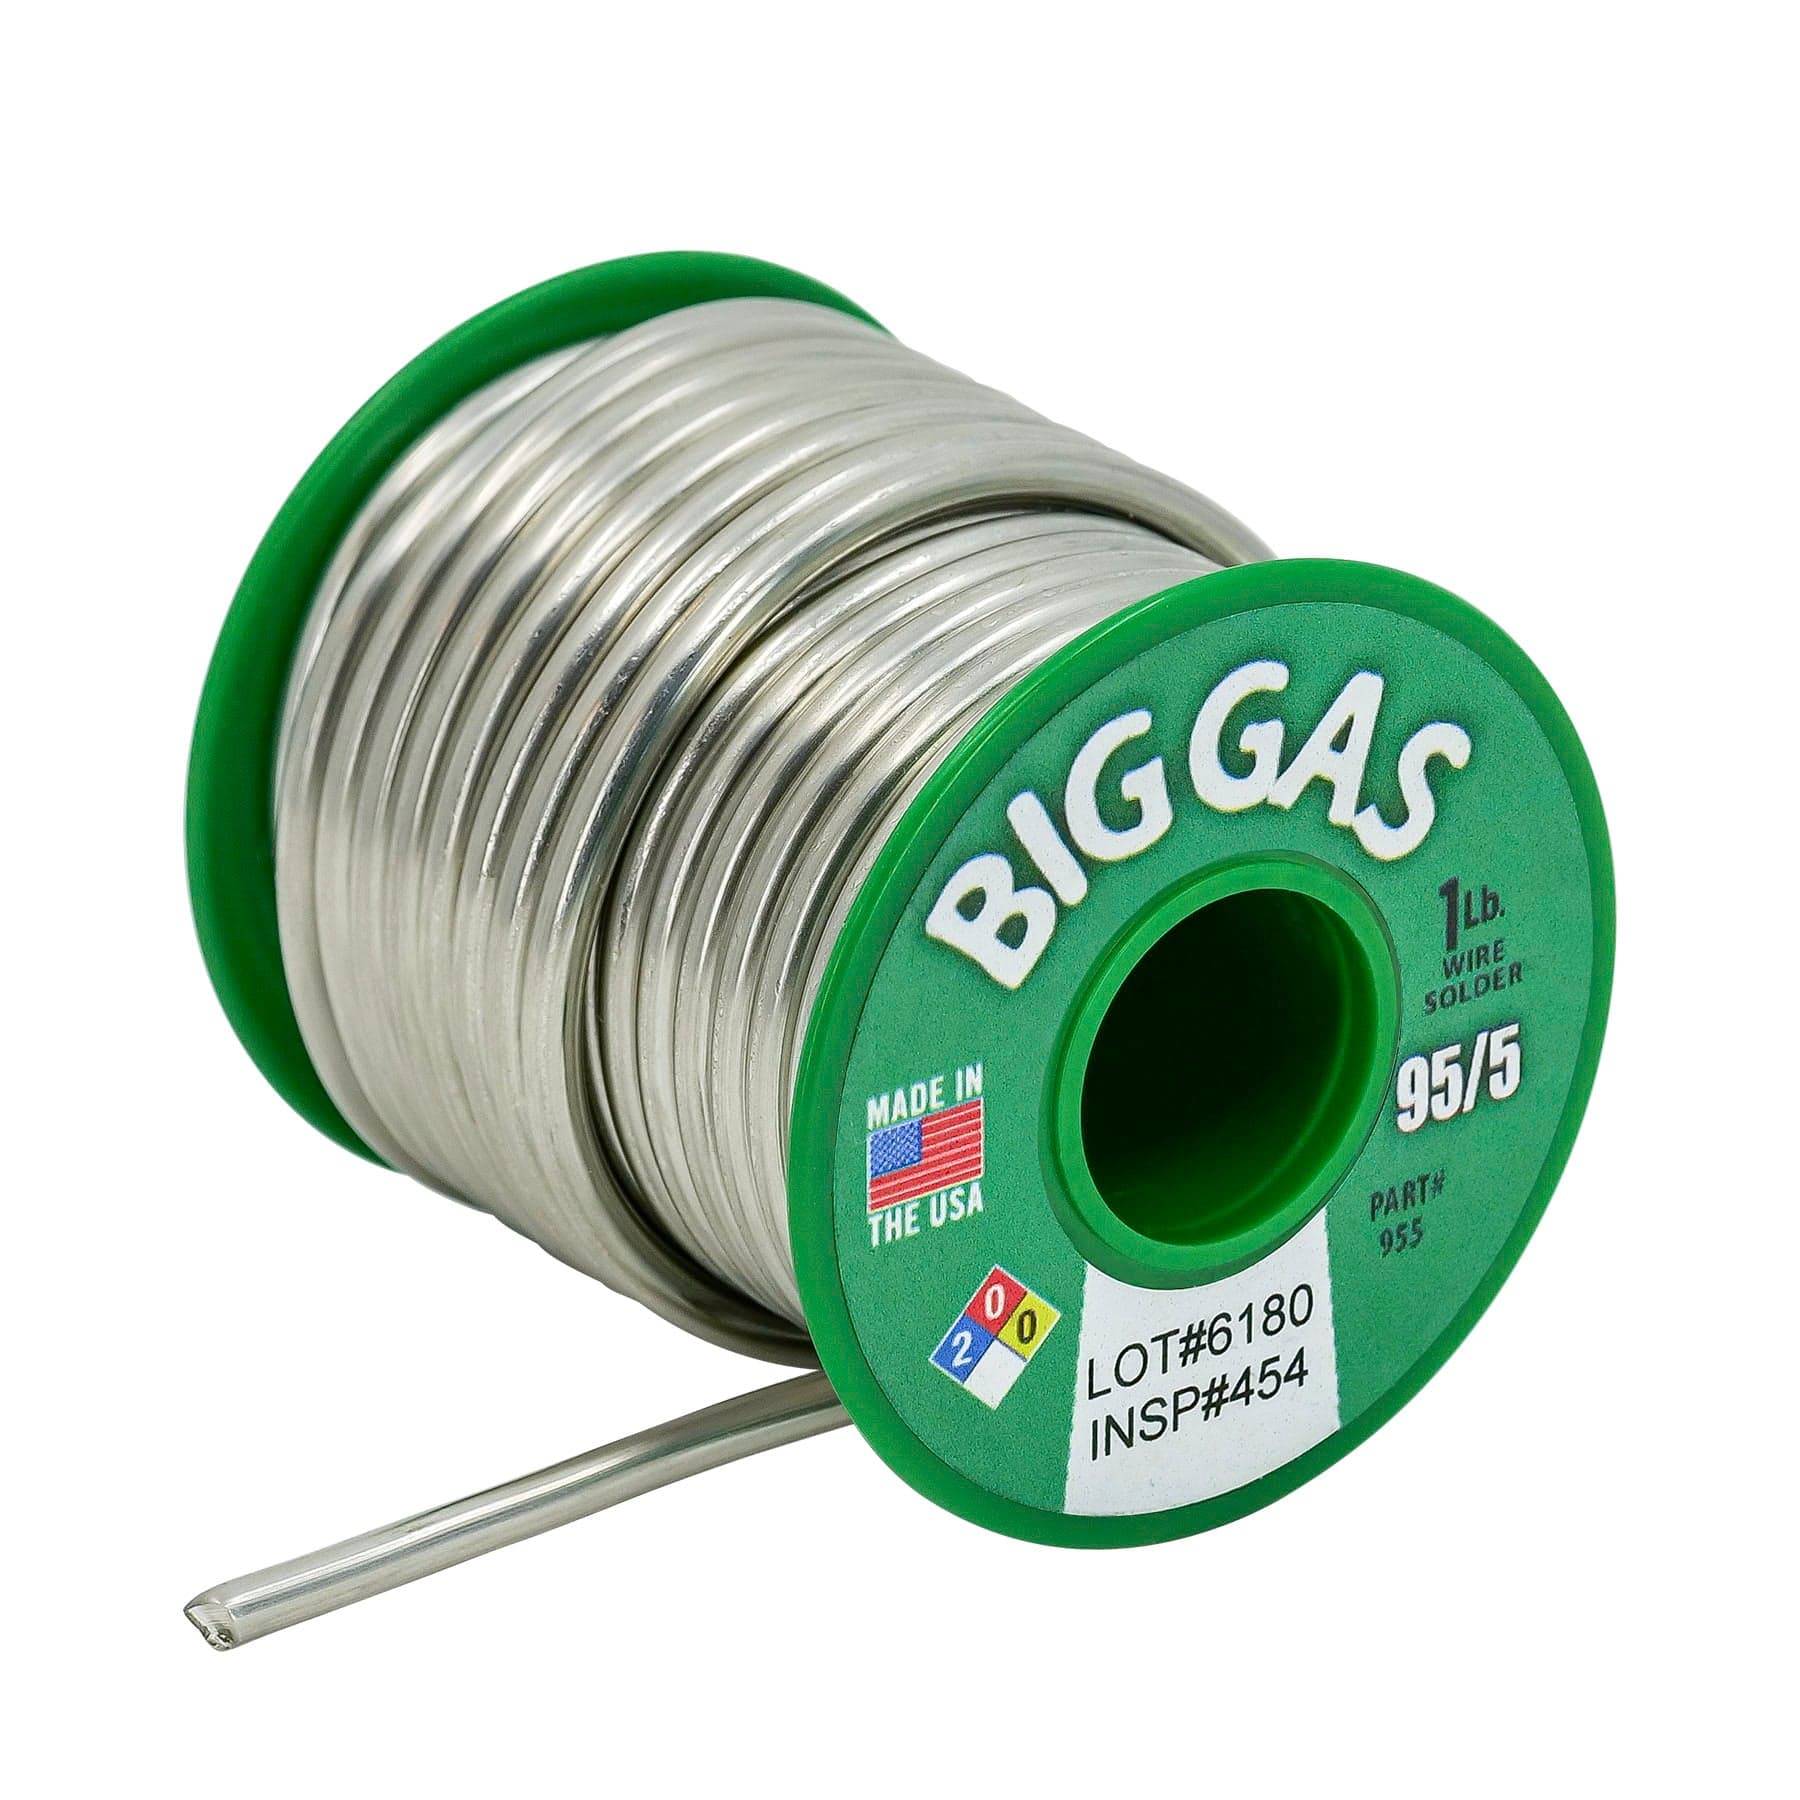 Big Gas Premium 95/5 Solder - 1 Lb. Spool - Made in The USA - Box of 25